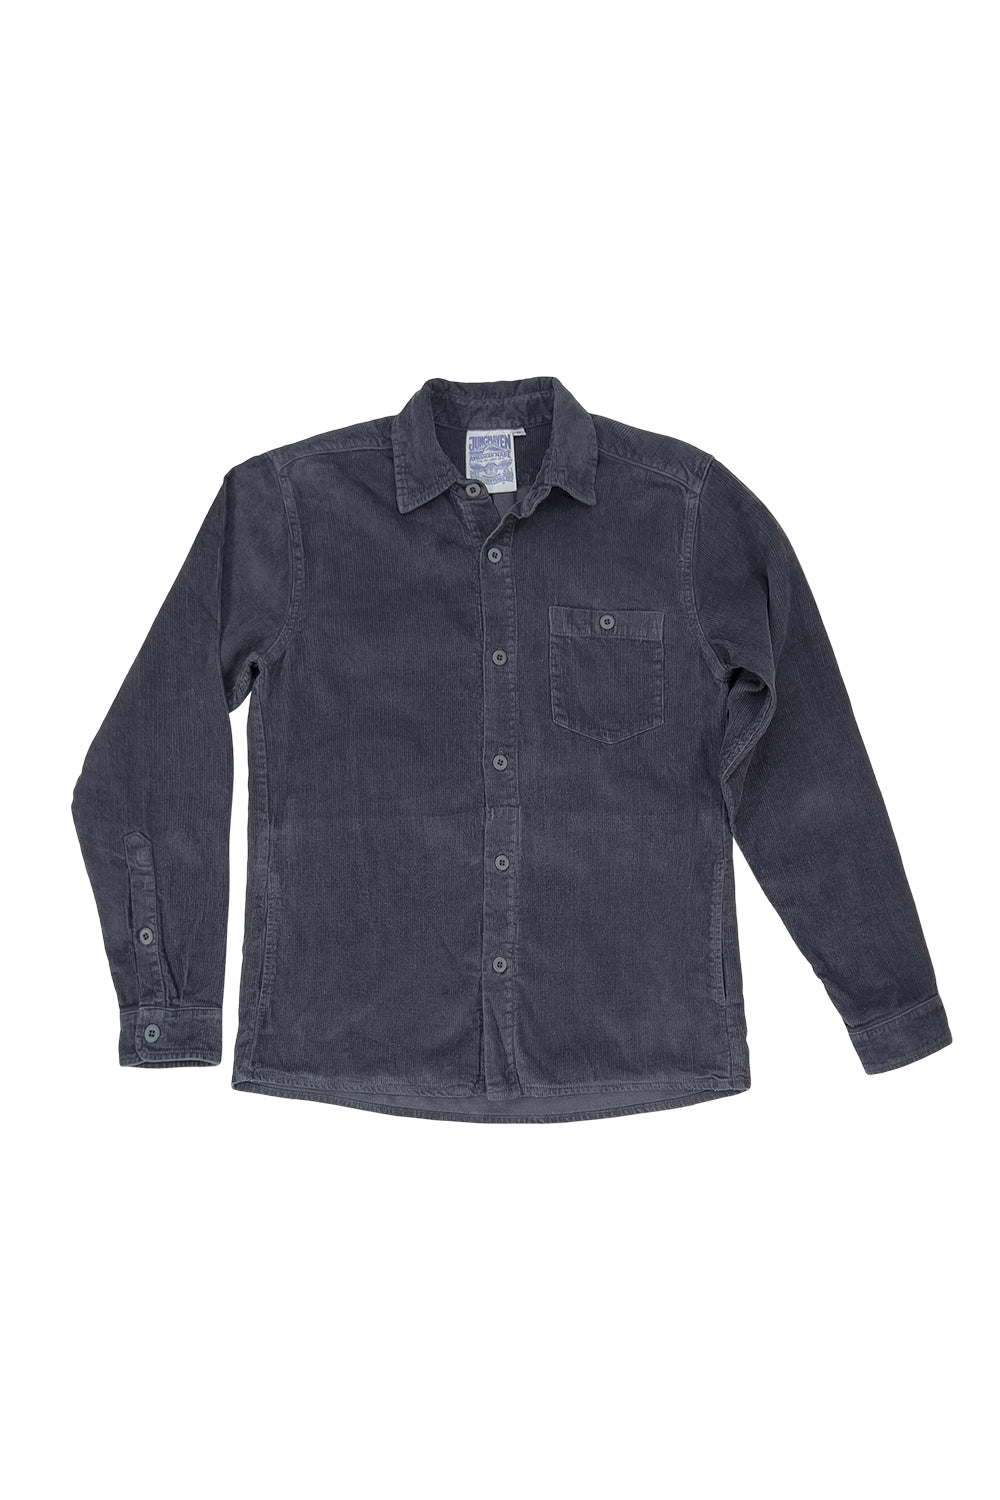 Oxnard Shirt Jacket | Jungmaven Hemp Clothing & Accessories Color: Diesel Gray